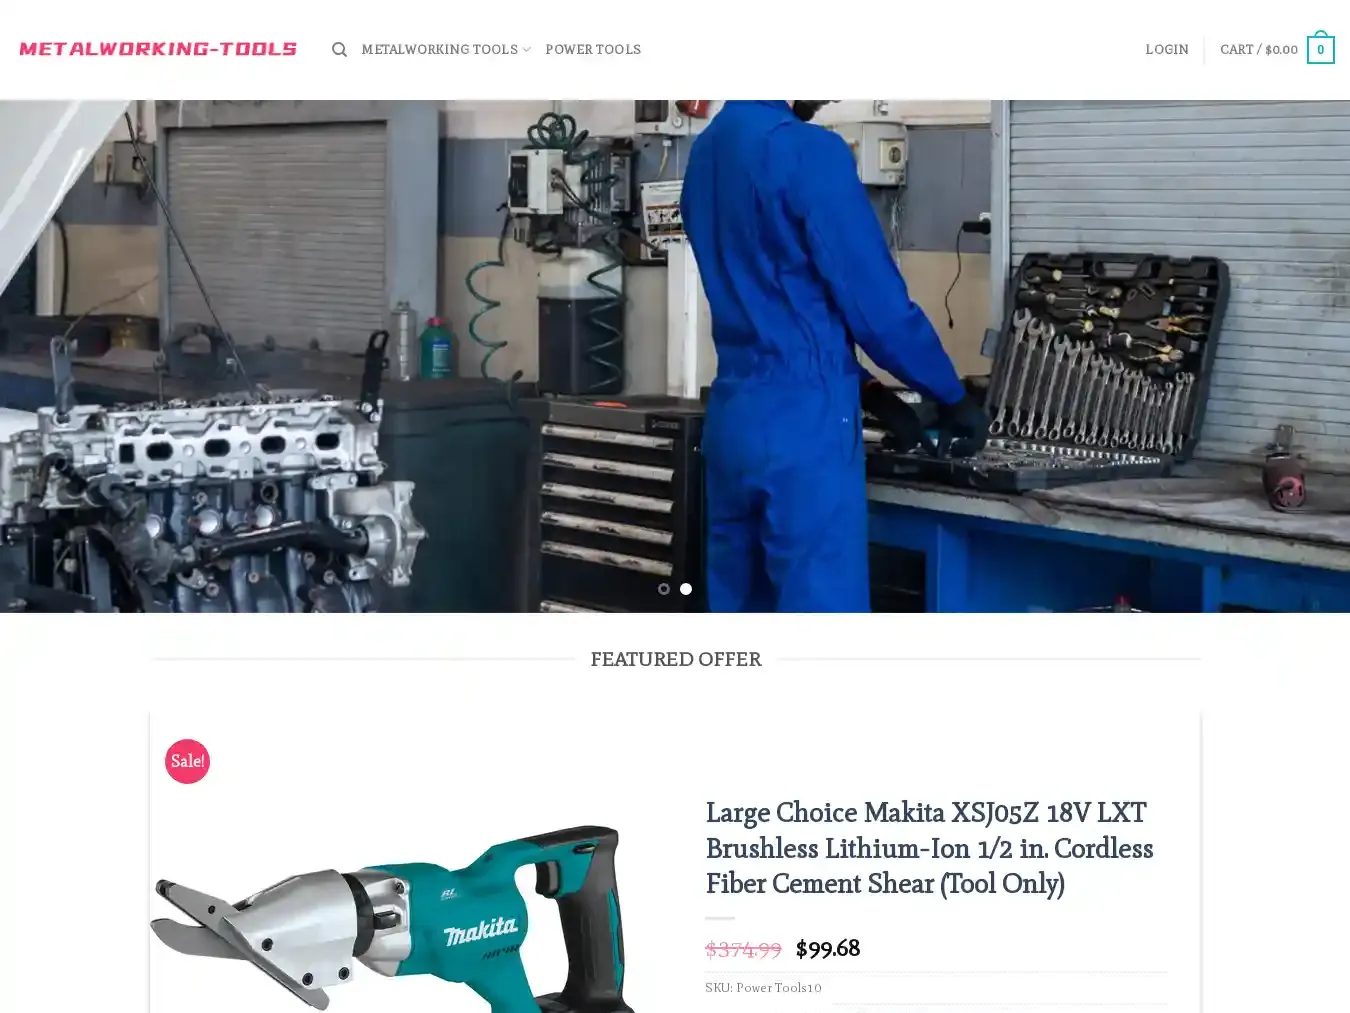 Metalworking-tools.com Fraudulent Non-Delivery website.